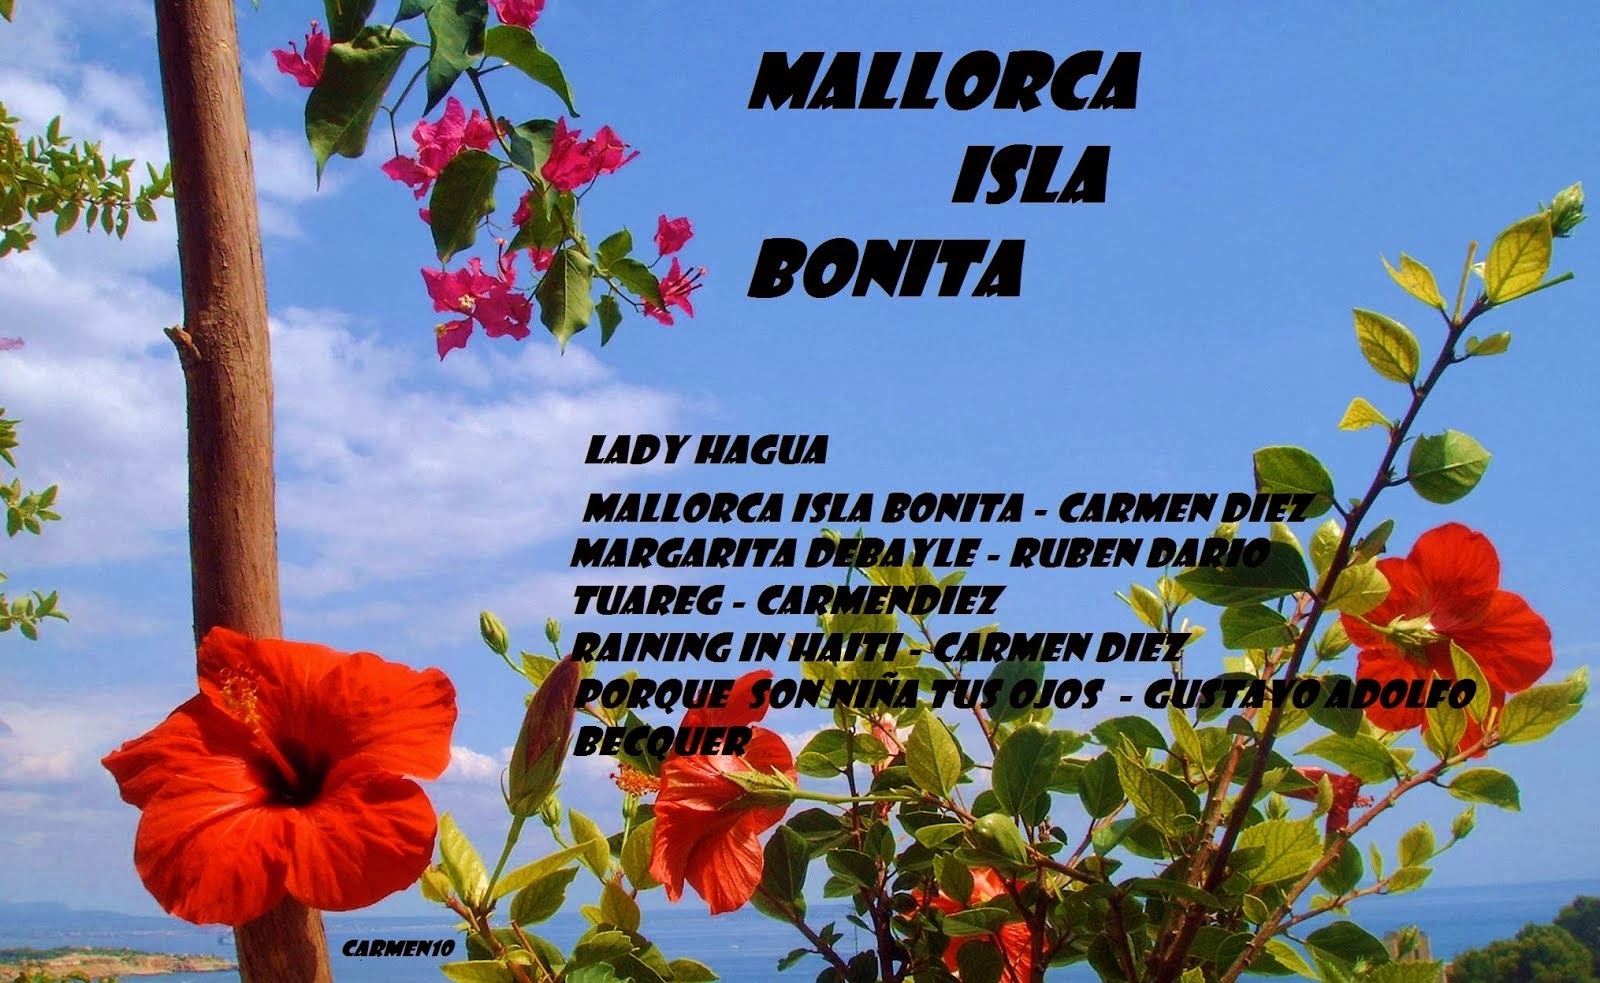 MALLORCA ISLA BONITA -  LADY HAGUA